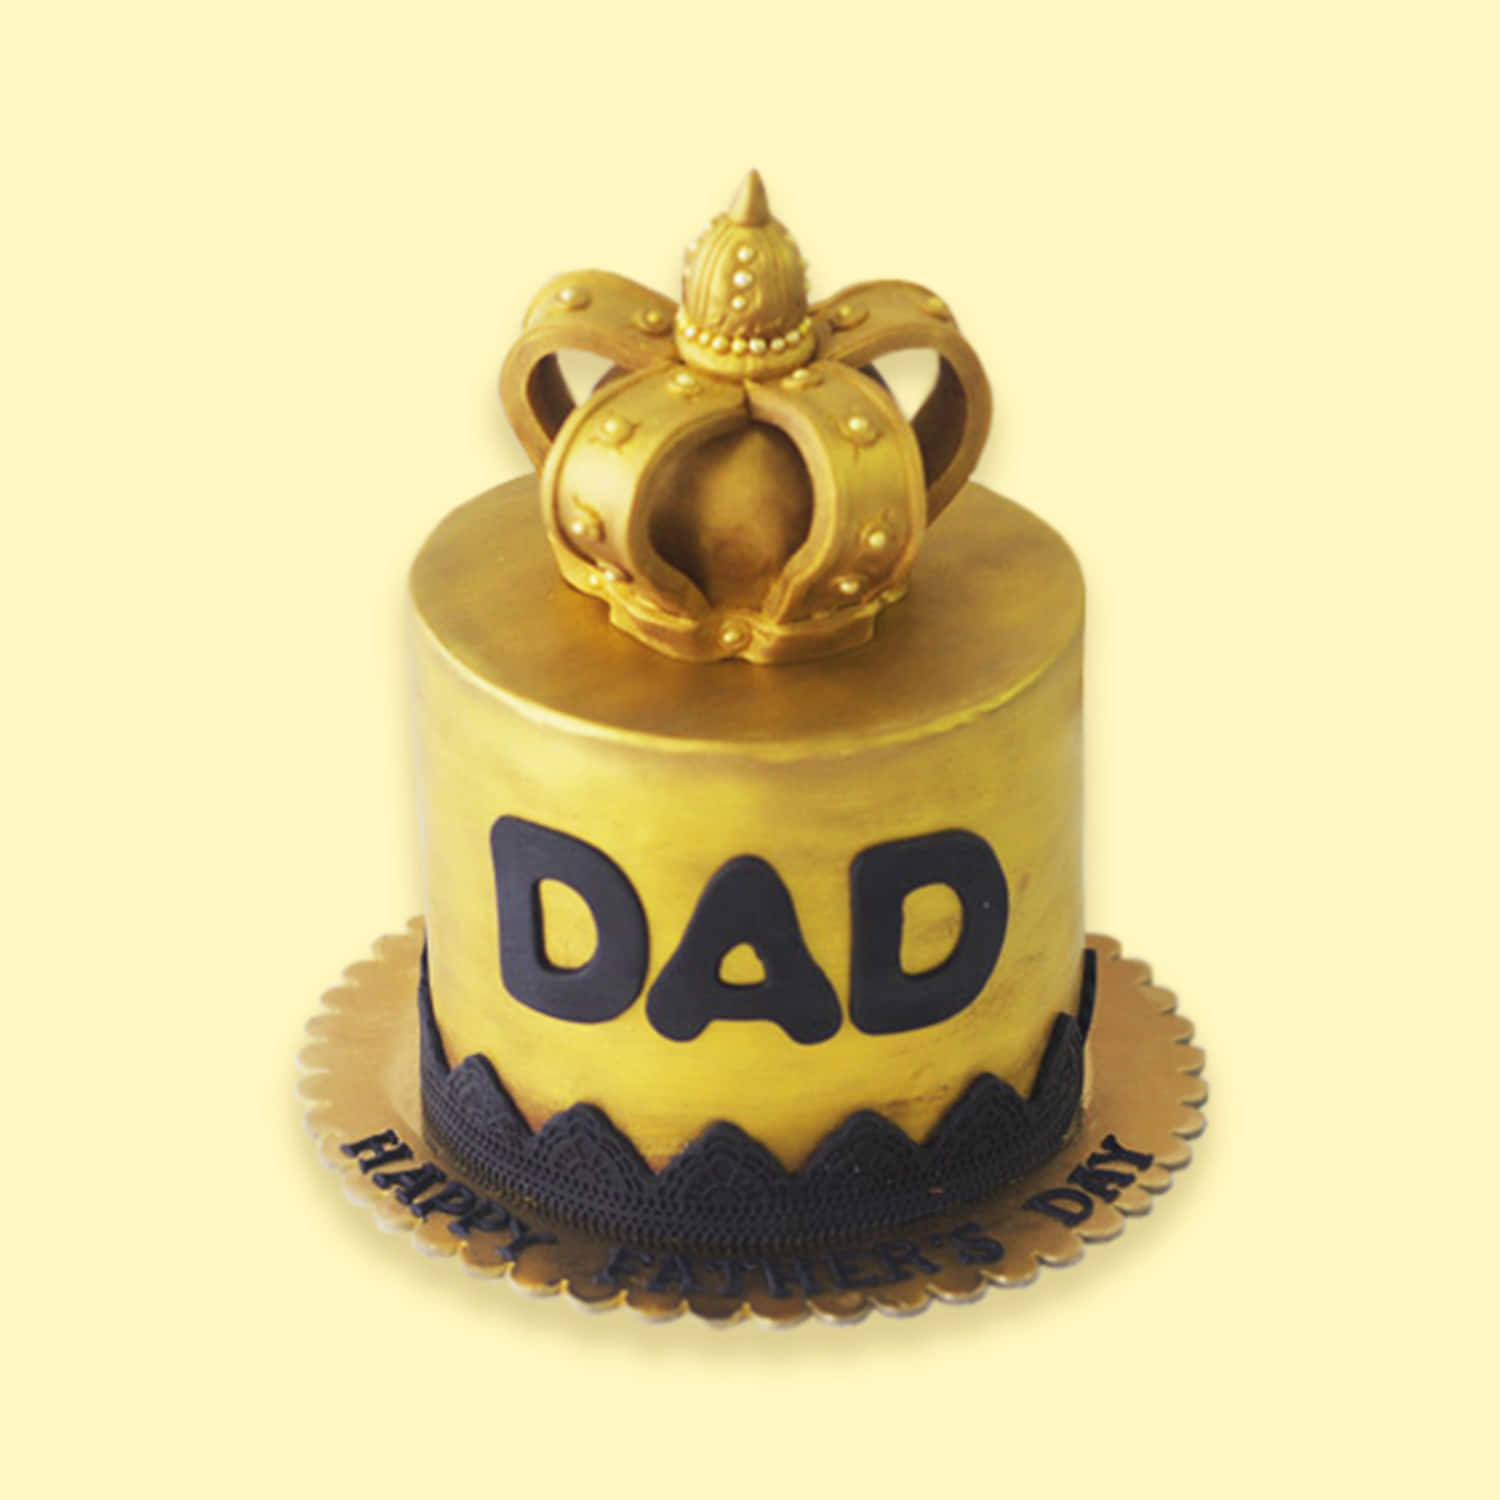 Prince Theme Cake Designs & Images